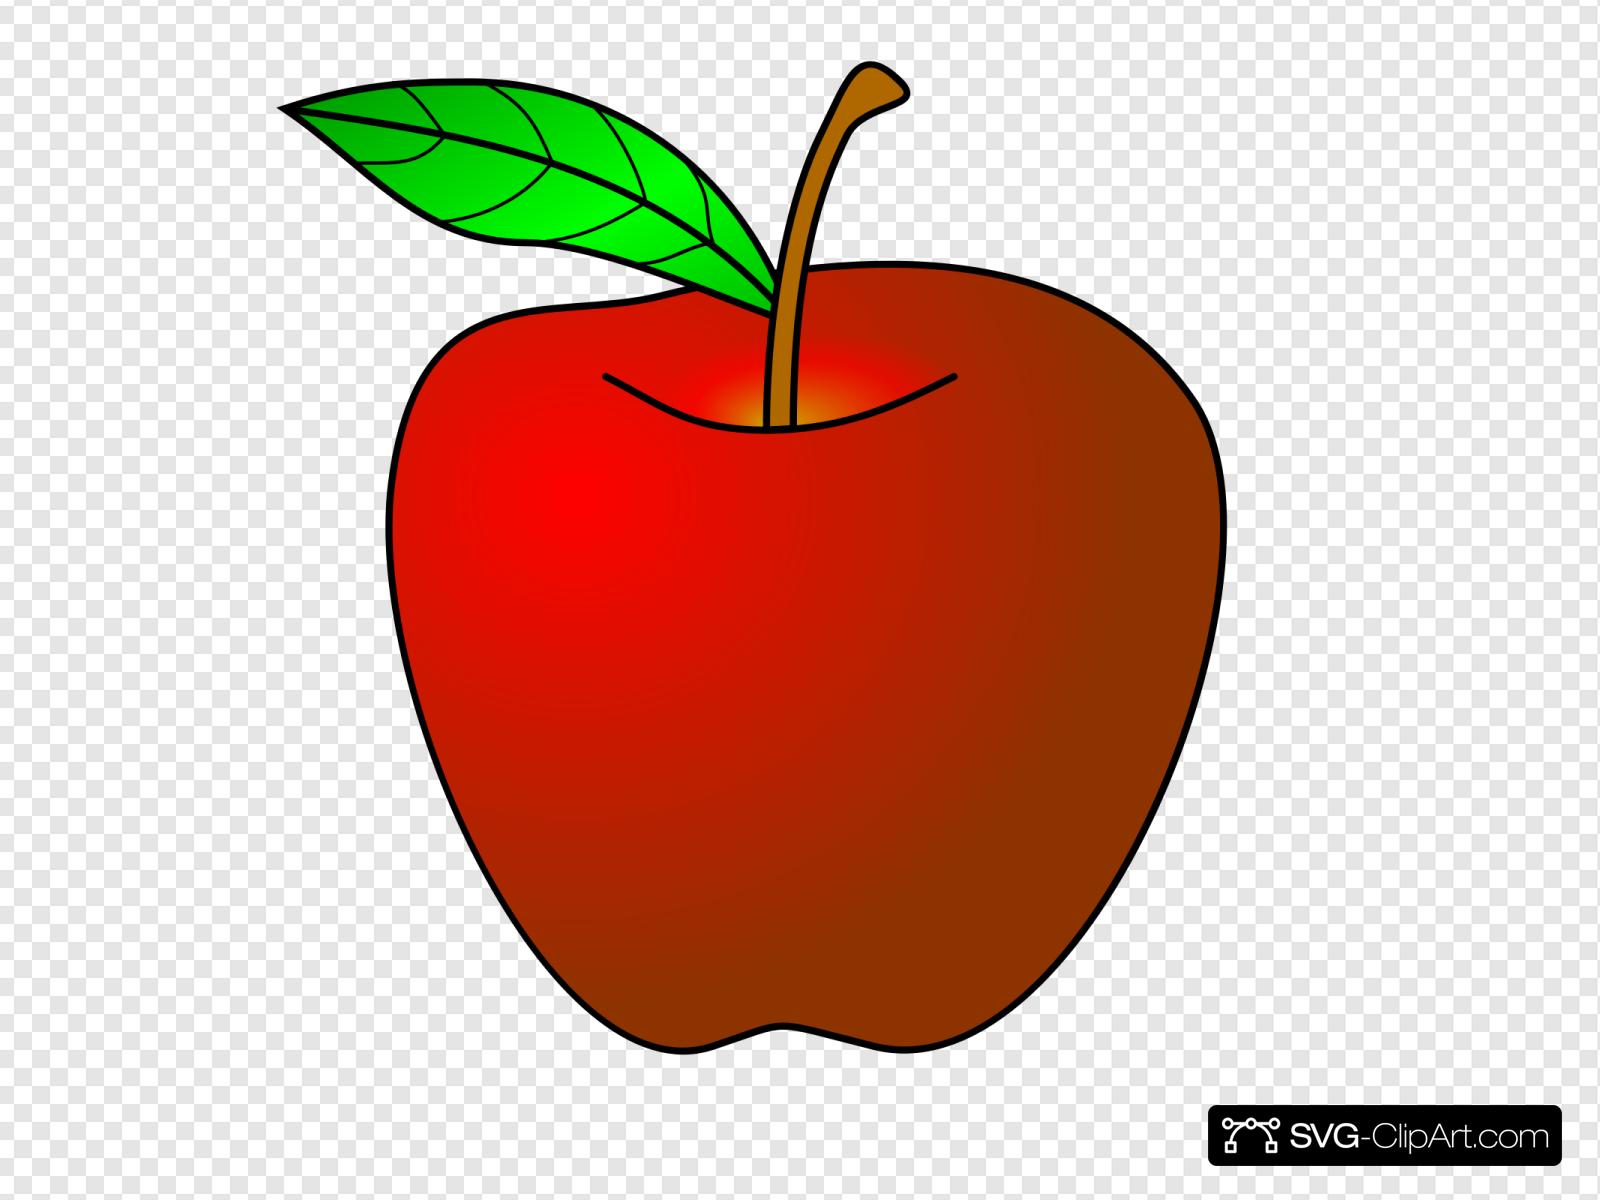 Apple clip art.